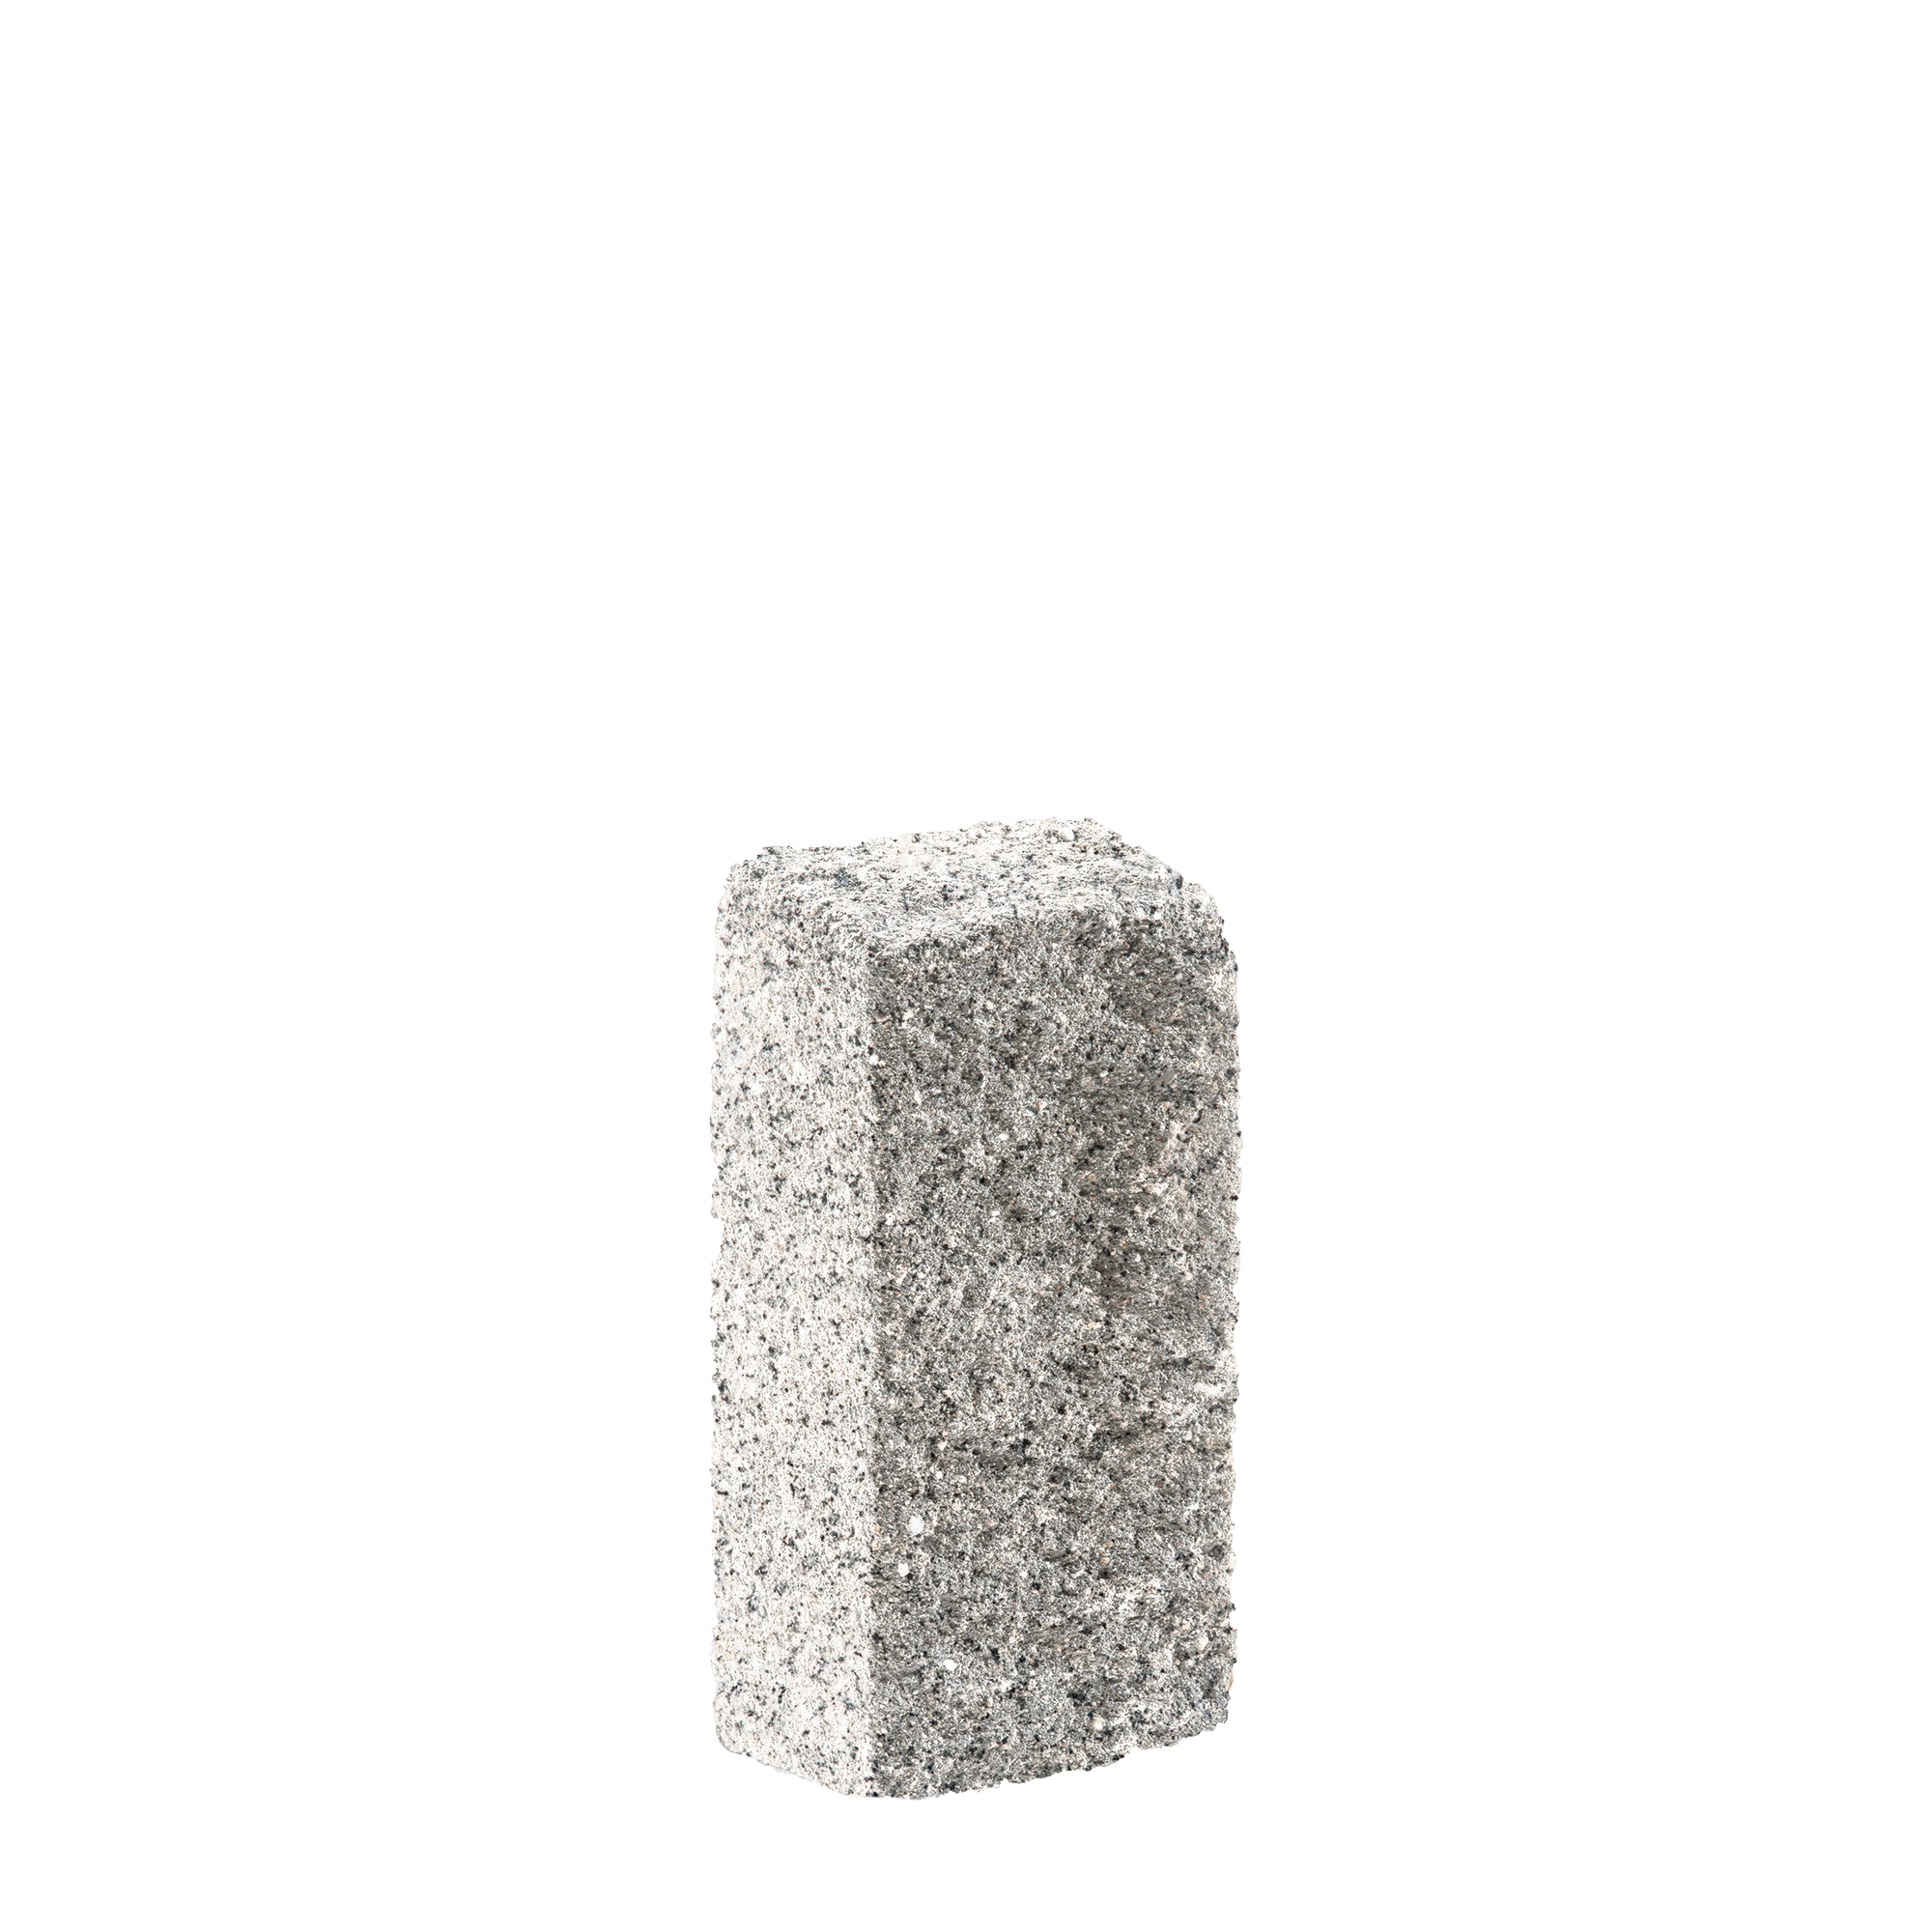 Mauerstein 'T-Wall Pico' Beton granitfarben 20 x 10 x 10 cm + product picture